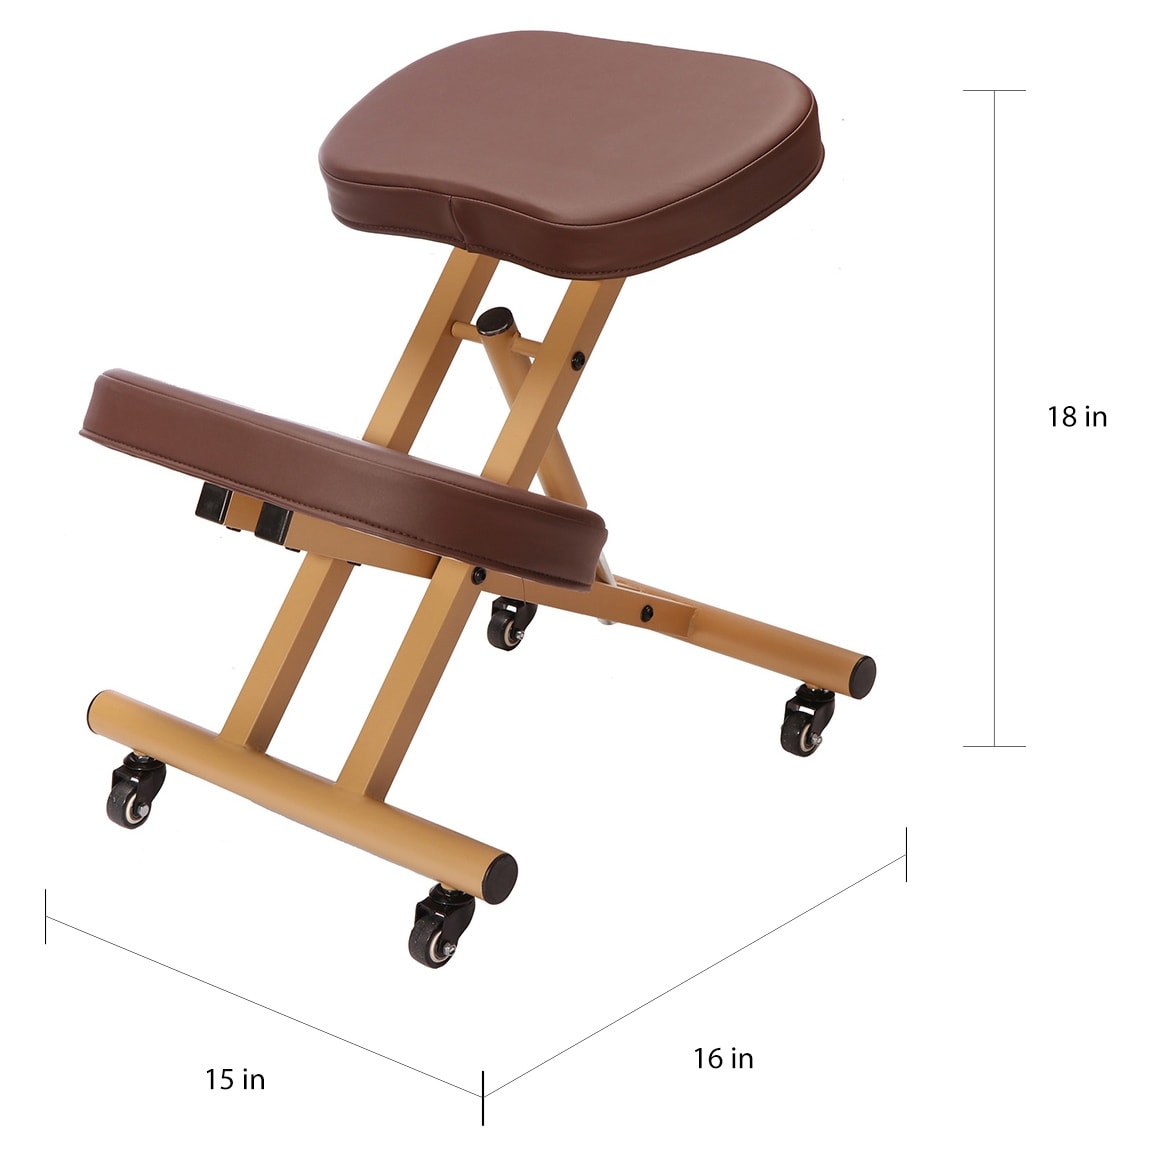 Gymax Ergonomic Kneeling Chair Rocking Stool Upright Posture Office - Grey